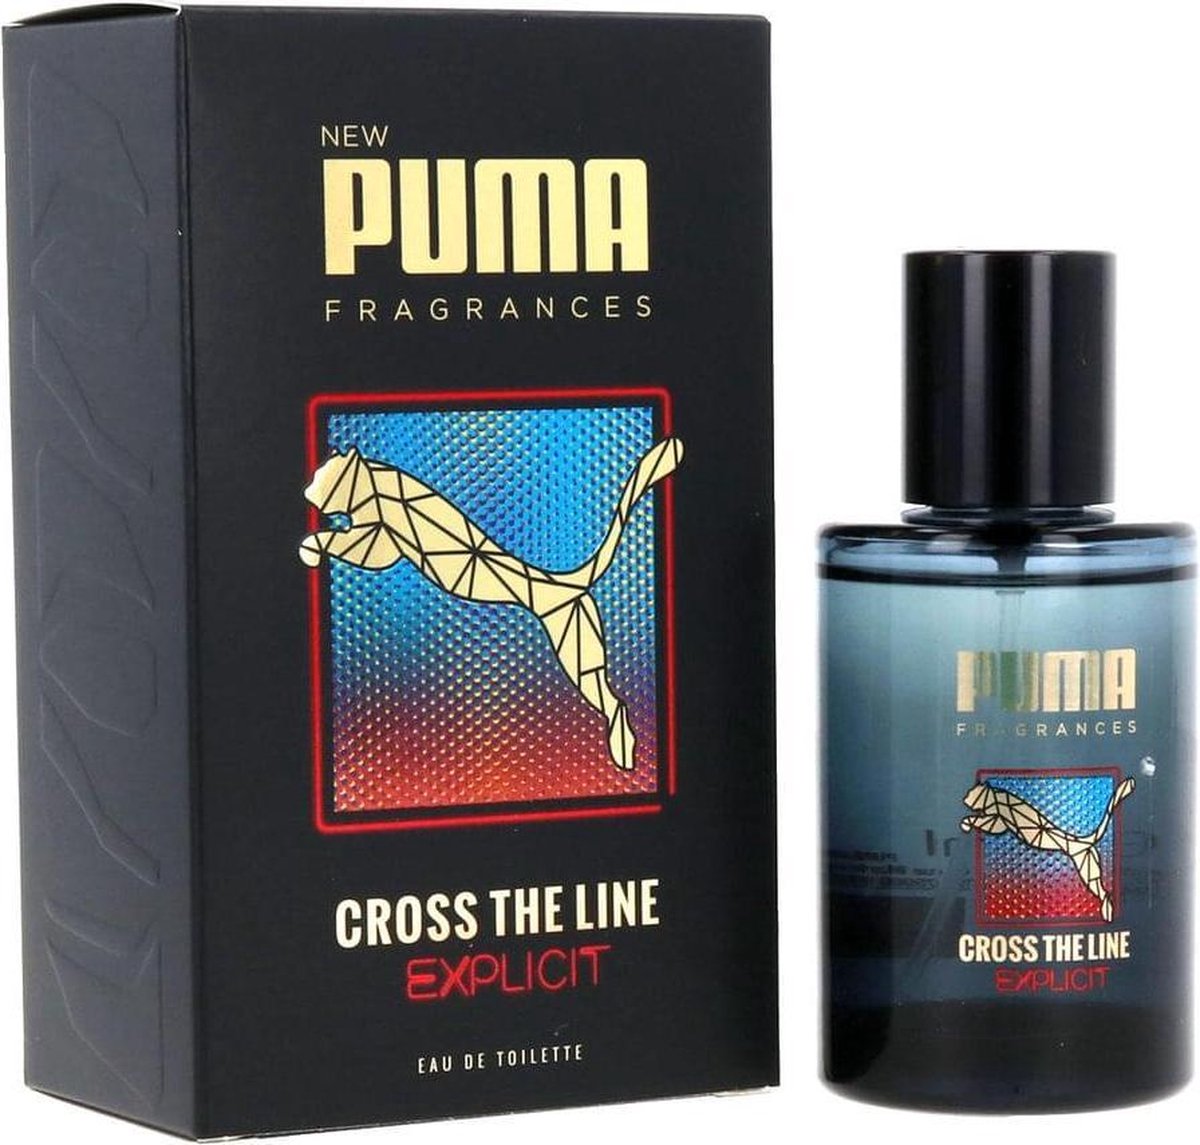 Puma Cross the Line Explicit Eau de toilette spray 50 ml